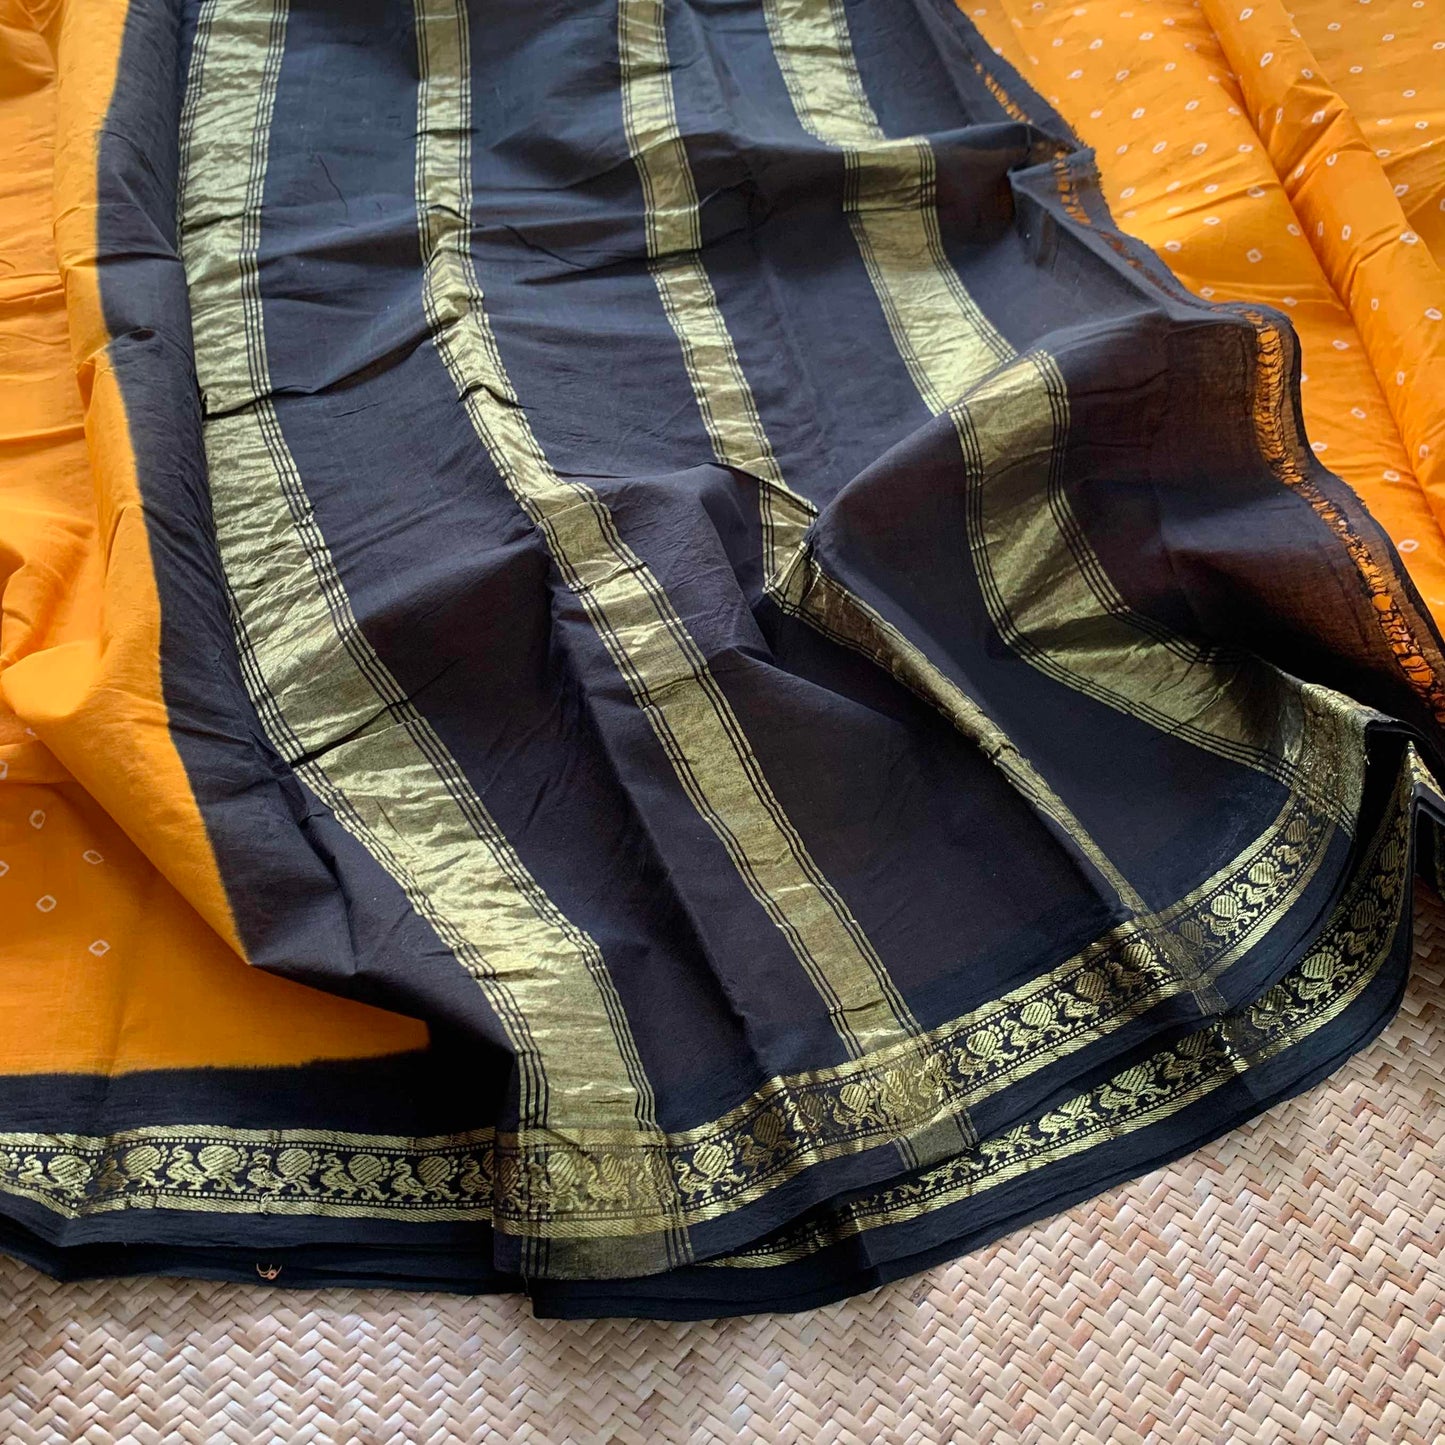 Yellow Saree With Black Border , Hand knotted Sungudi On a Hand woven Cotton saree, Kaikattu Sungadi